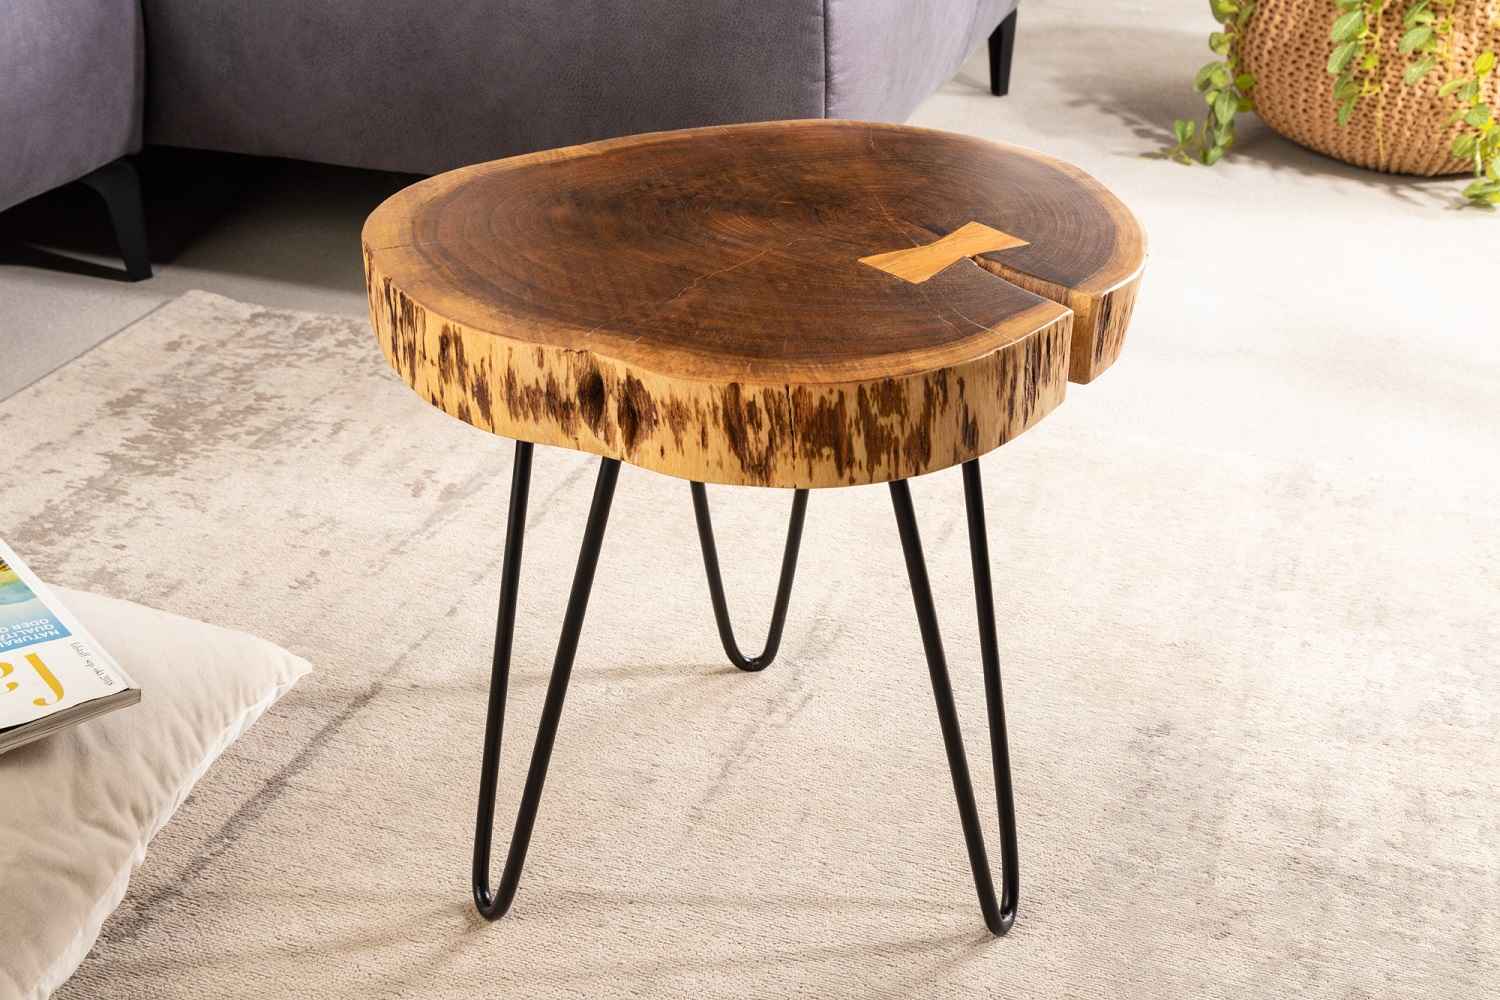 LuxD Designový odkládací stolek Island 40 cm hnědá akácie